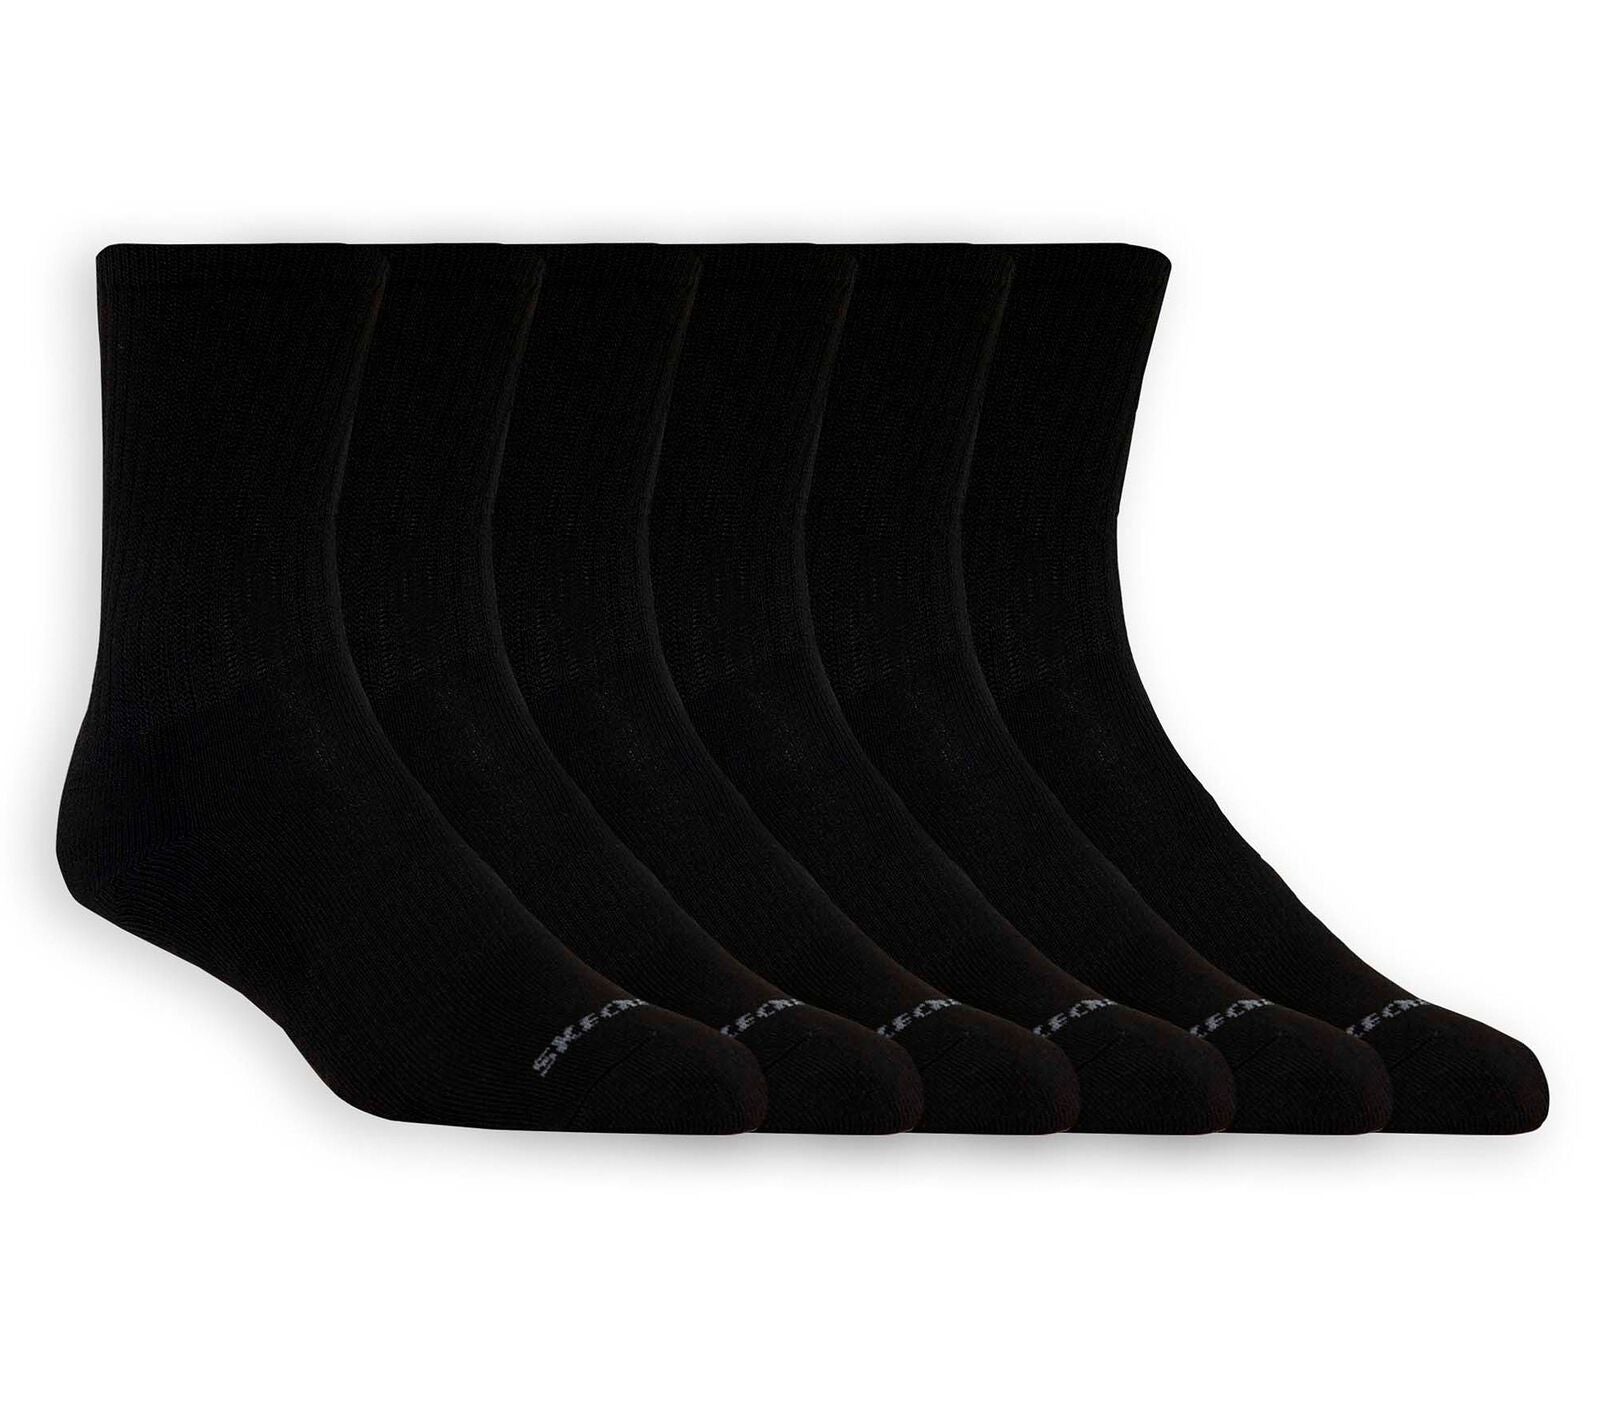 Six pairs of Skechers Men's Crew socks Black with Skechers logo.